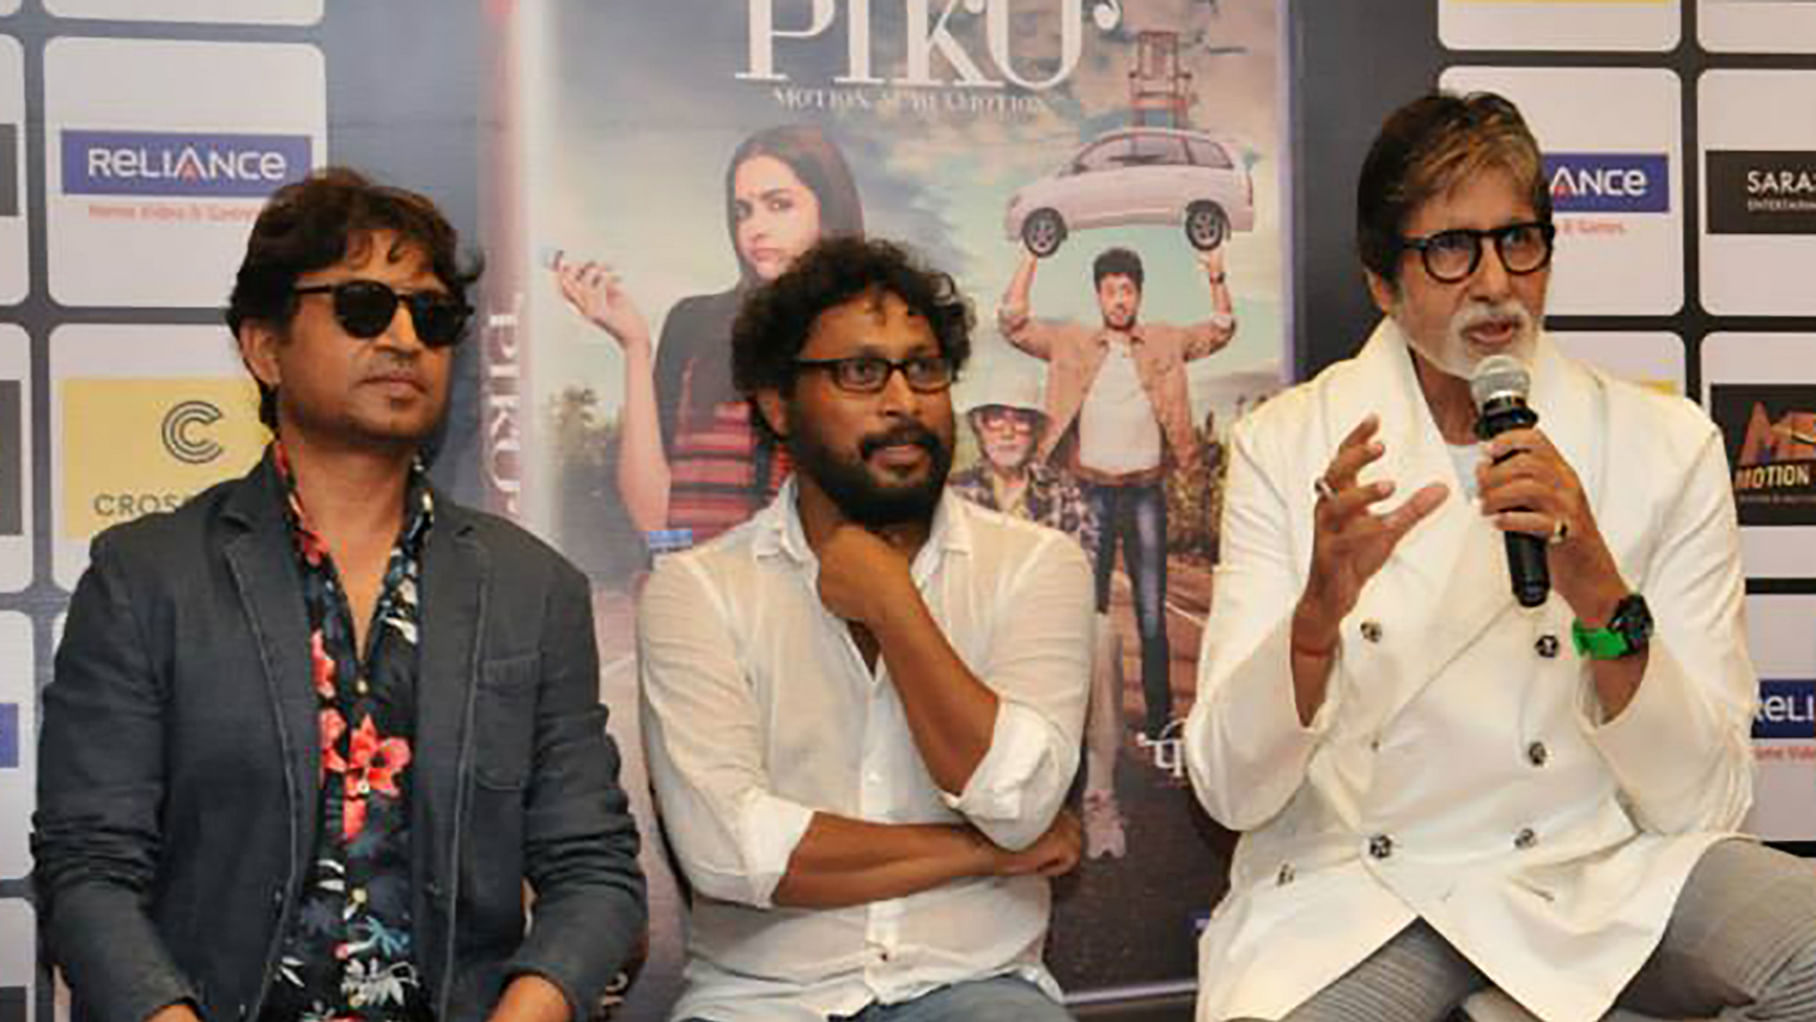 Piku director Shoojit Sircar with actors Irrfan Khan and Amitabh Bachchan. (Photo: <a href="https://www.facebook.com/Crosswordbookstores/photos/a.10153453472269085.1073741893.178693784084/10153453472524085/?type=3&amp;theater">Facebook</a>)